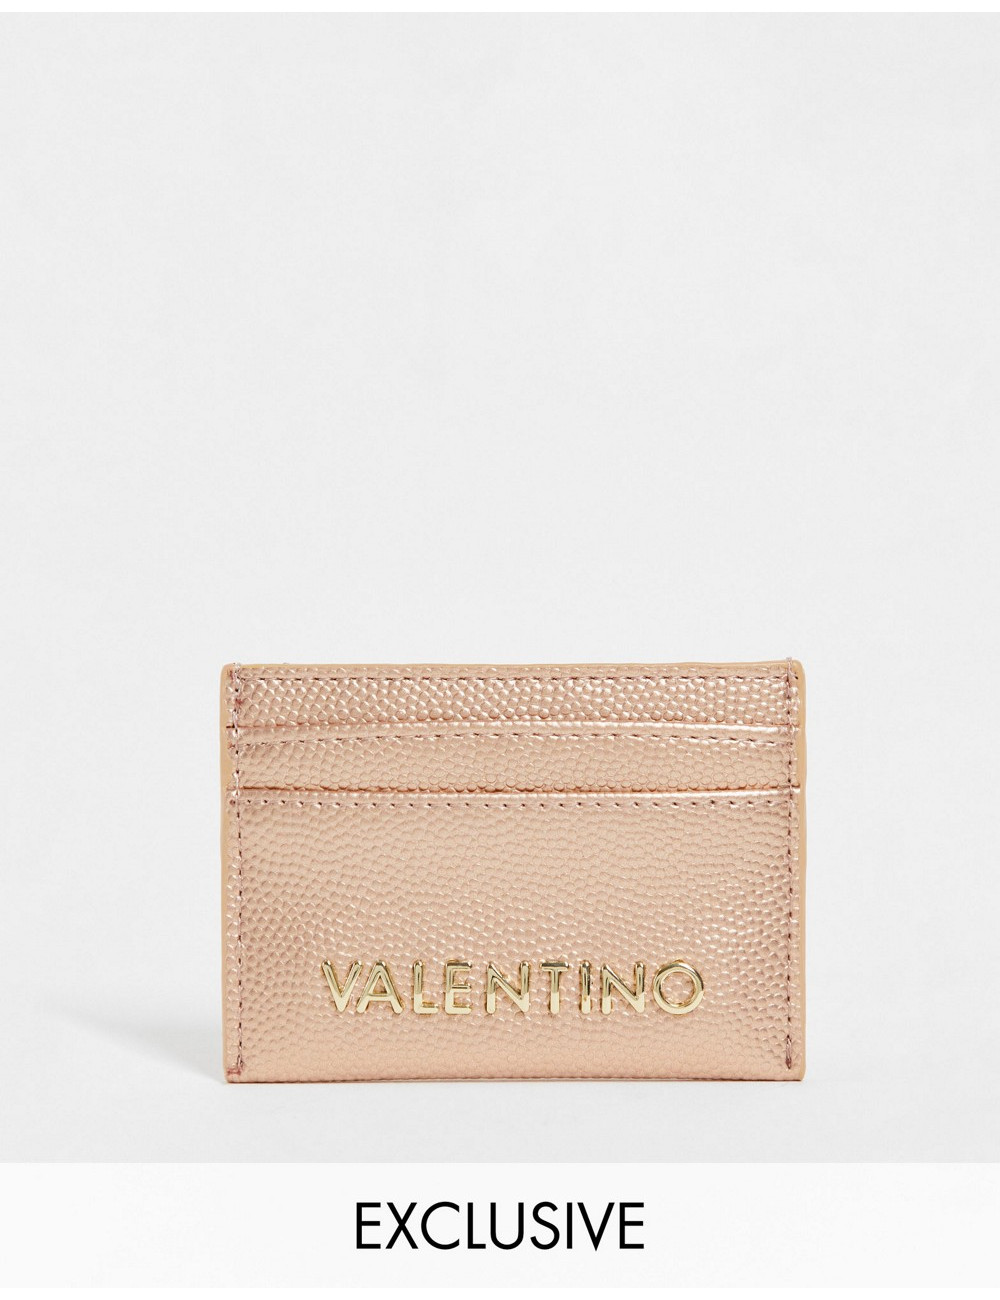 Valentino Bags Exclusive...